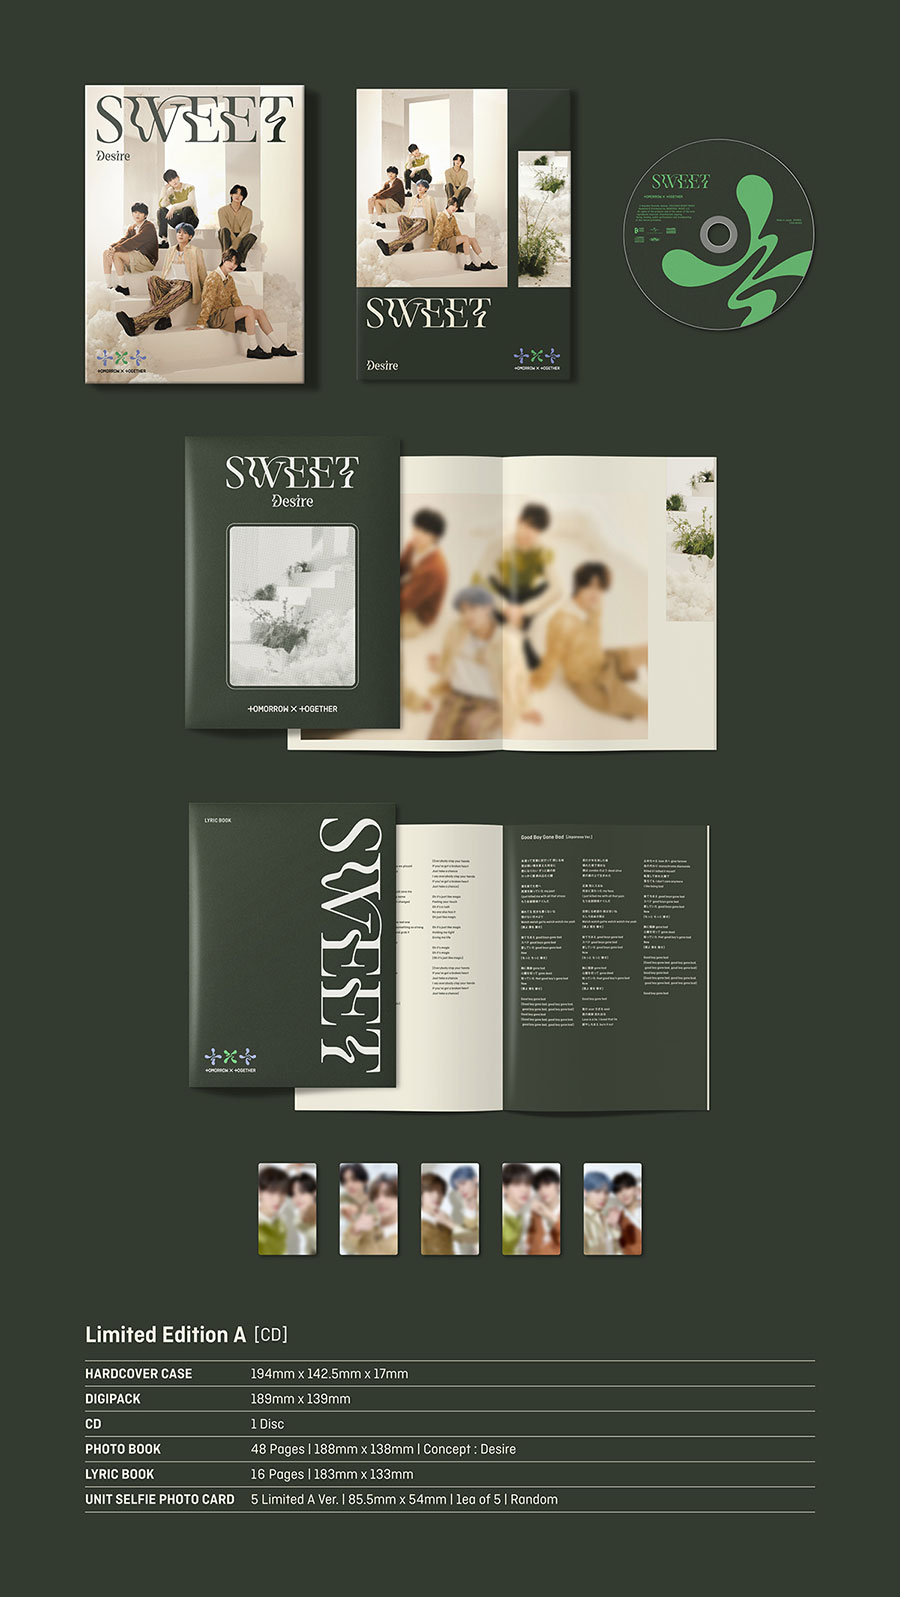 TOMORROW X TOGETHER 日本2ndアルバム『SWEET』7月5日リリース《HMV 